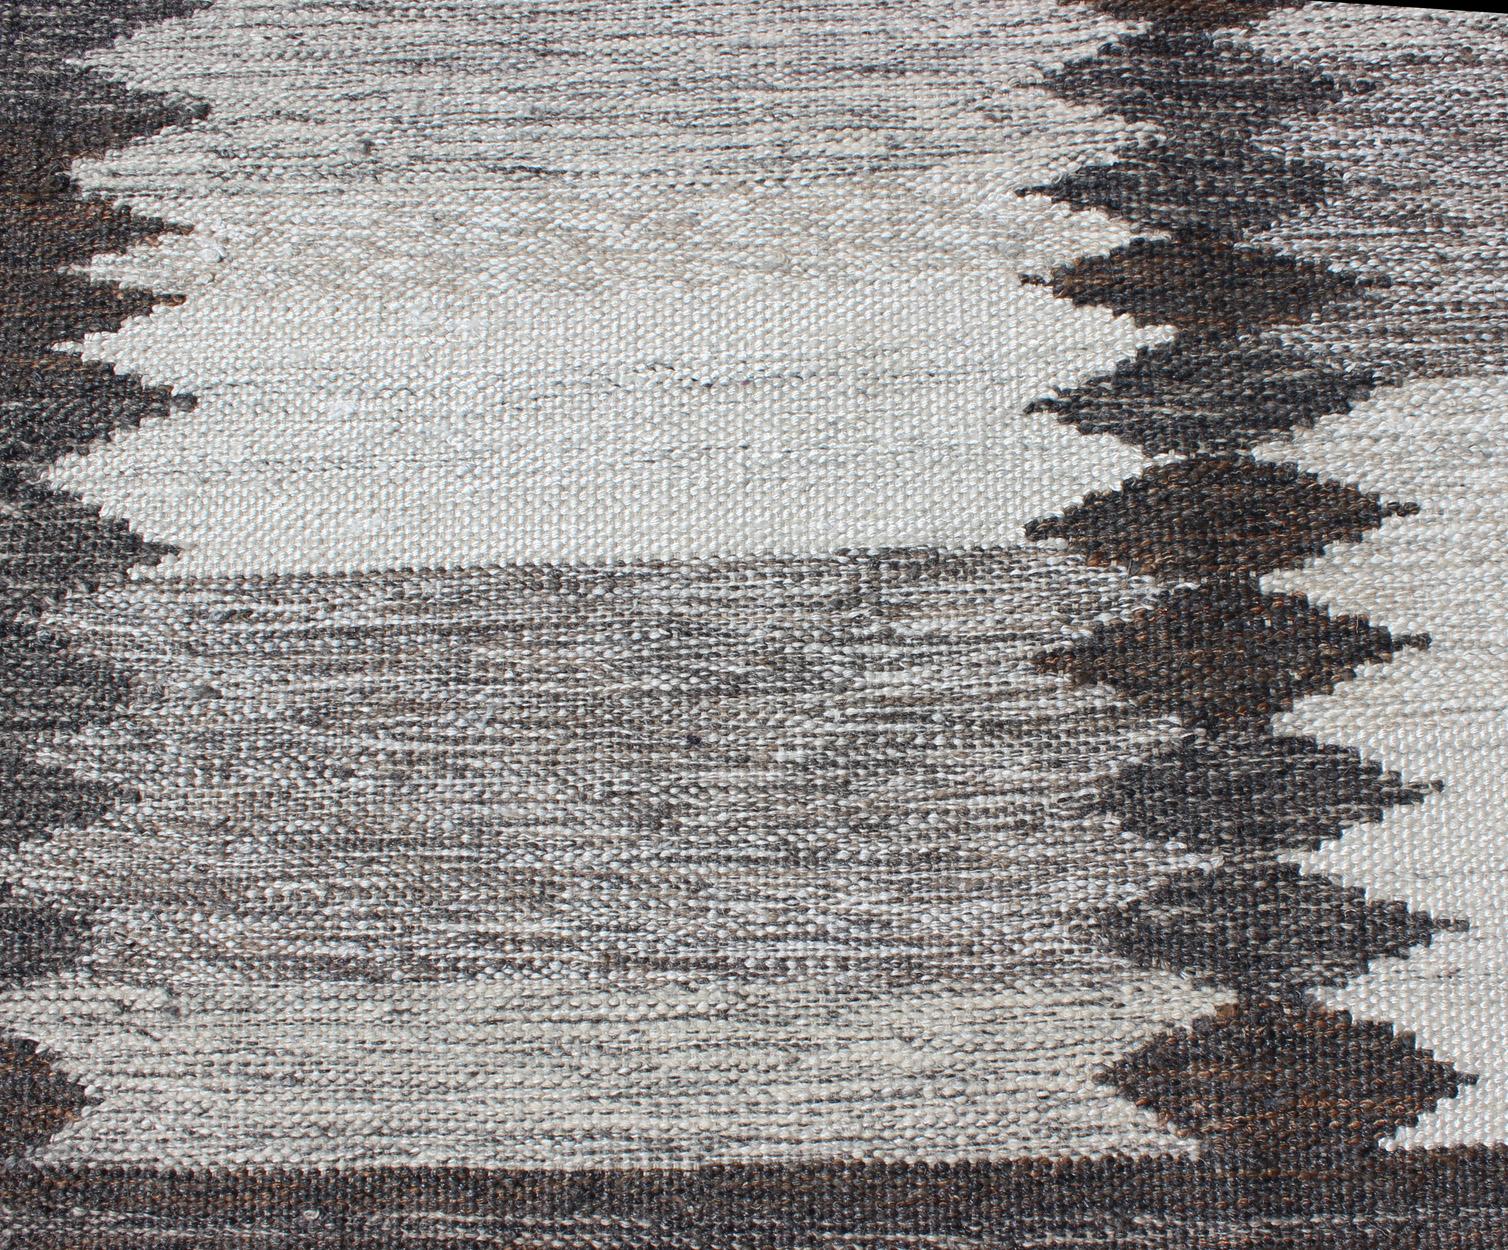 Contemporary Modern Scandinavian Flat-Weave Rug with Geometric Stripe Design in Gray Tones